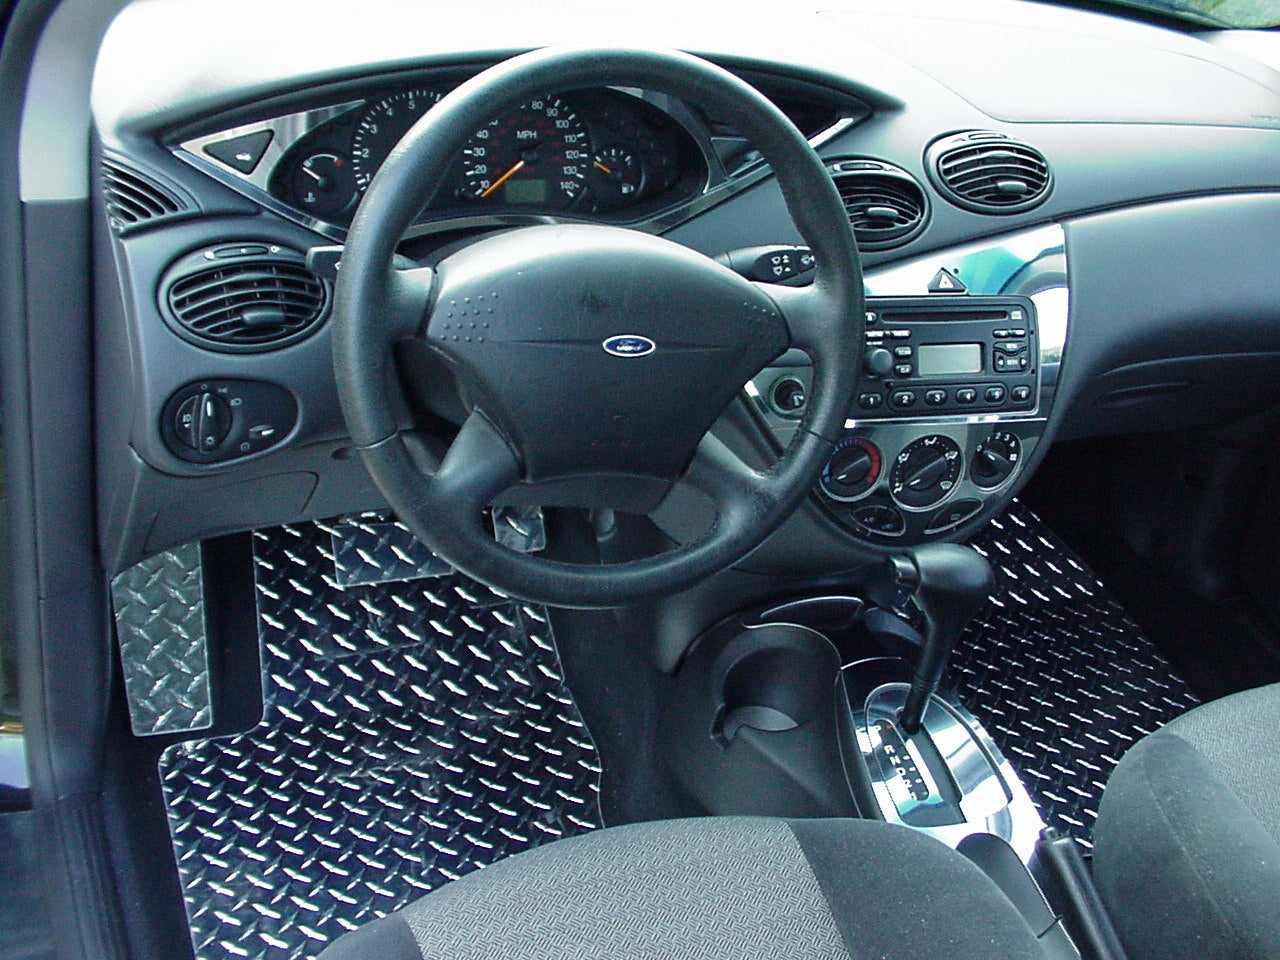 Ford Focus 2000-2006